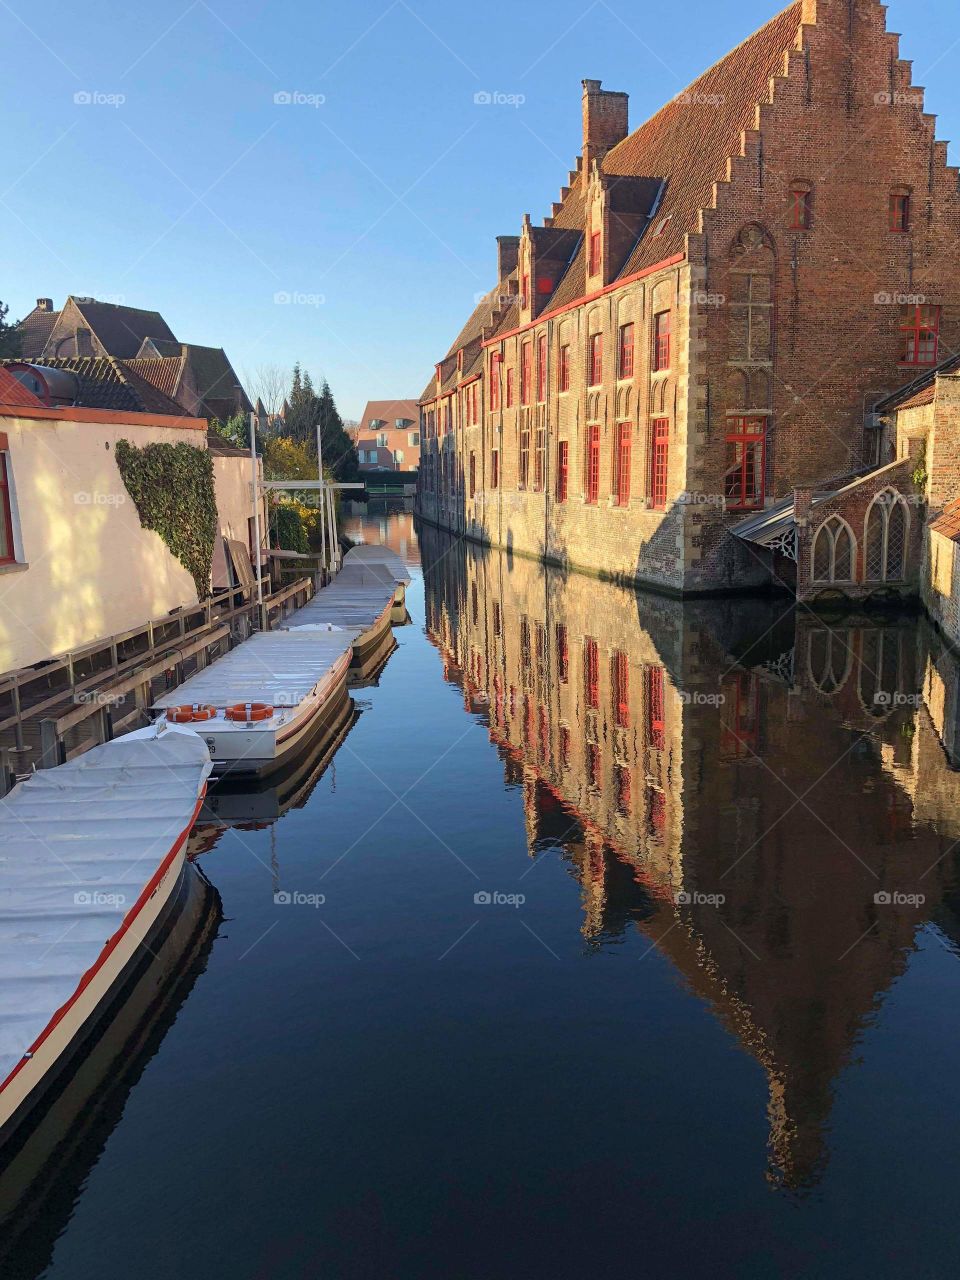 Nice walk around Bruges this morning.